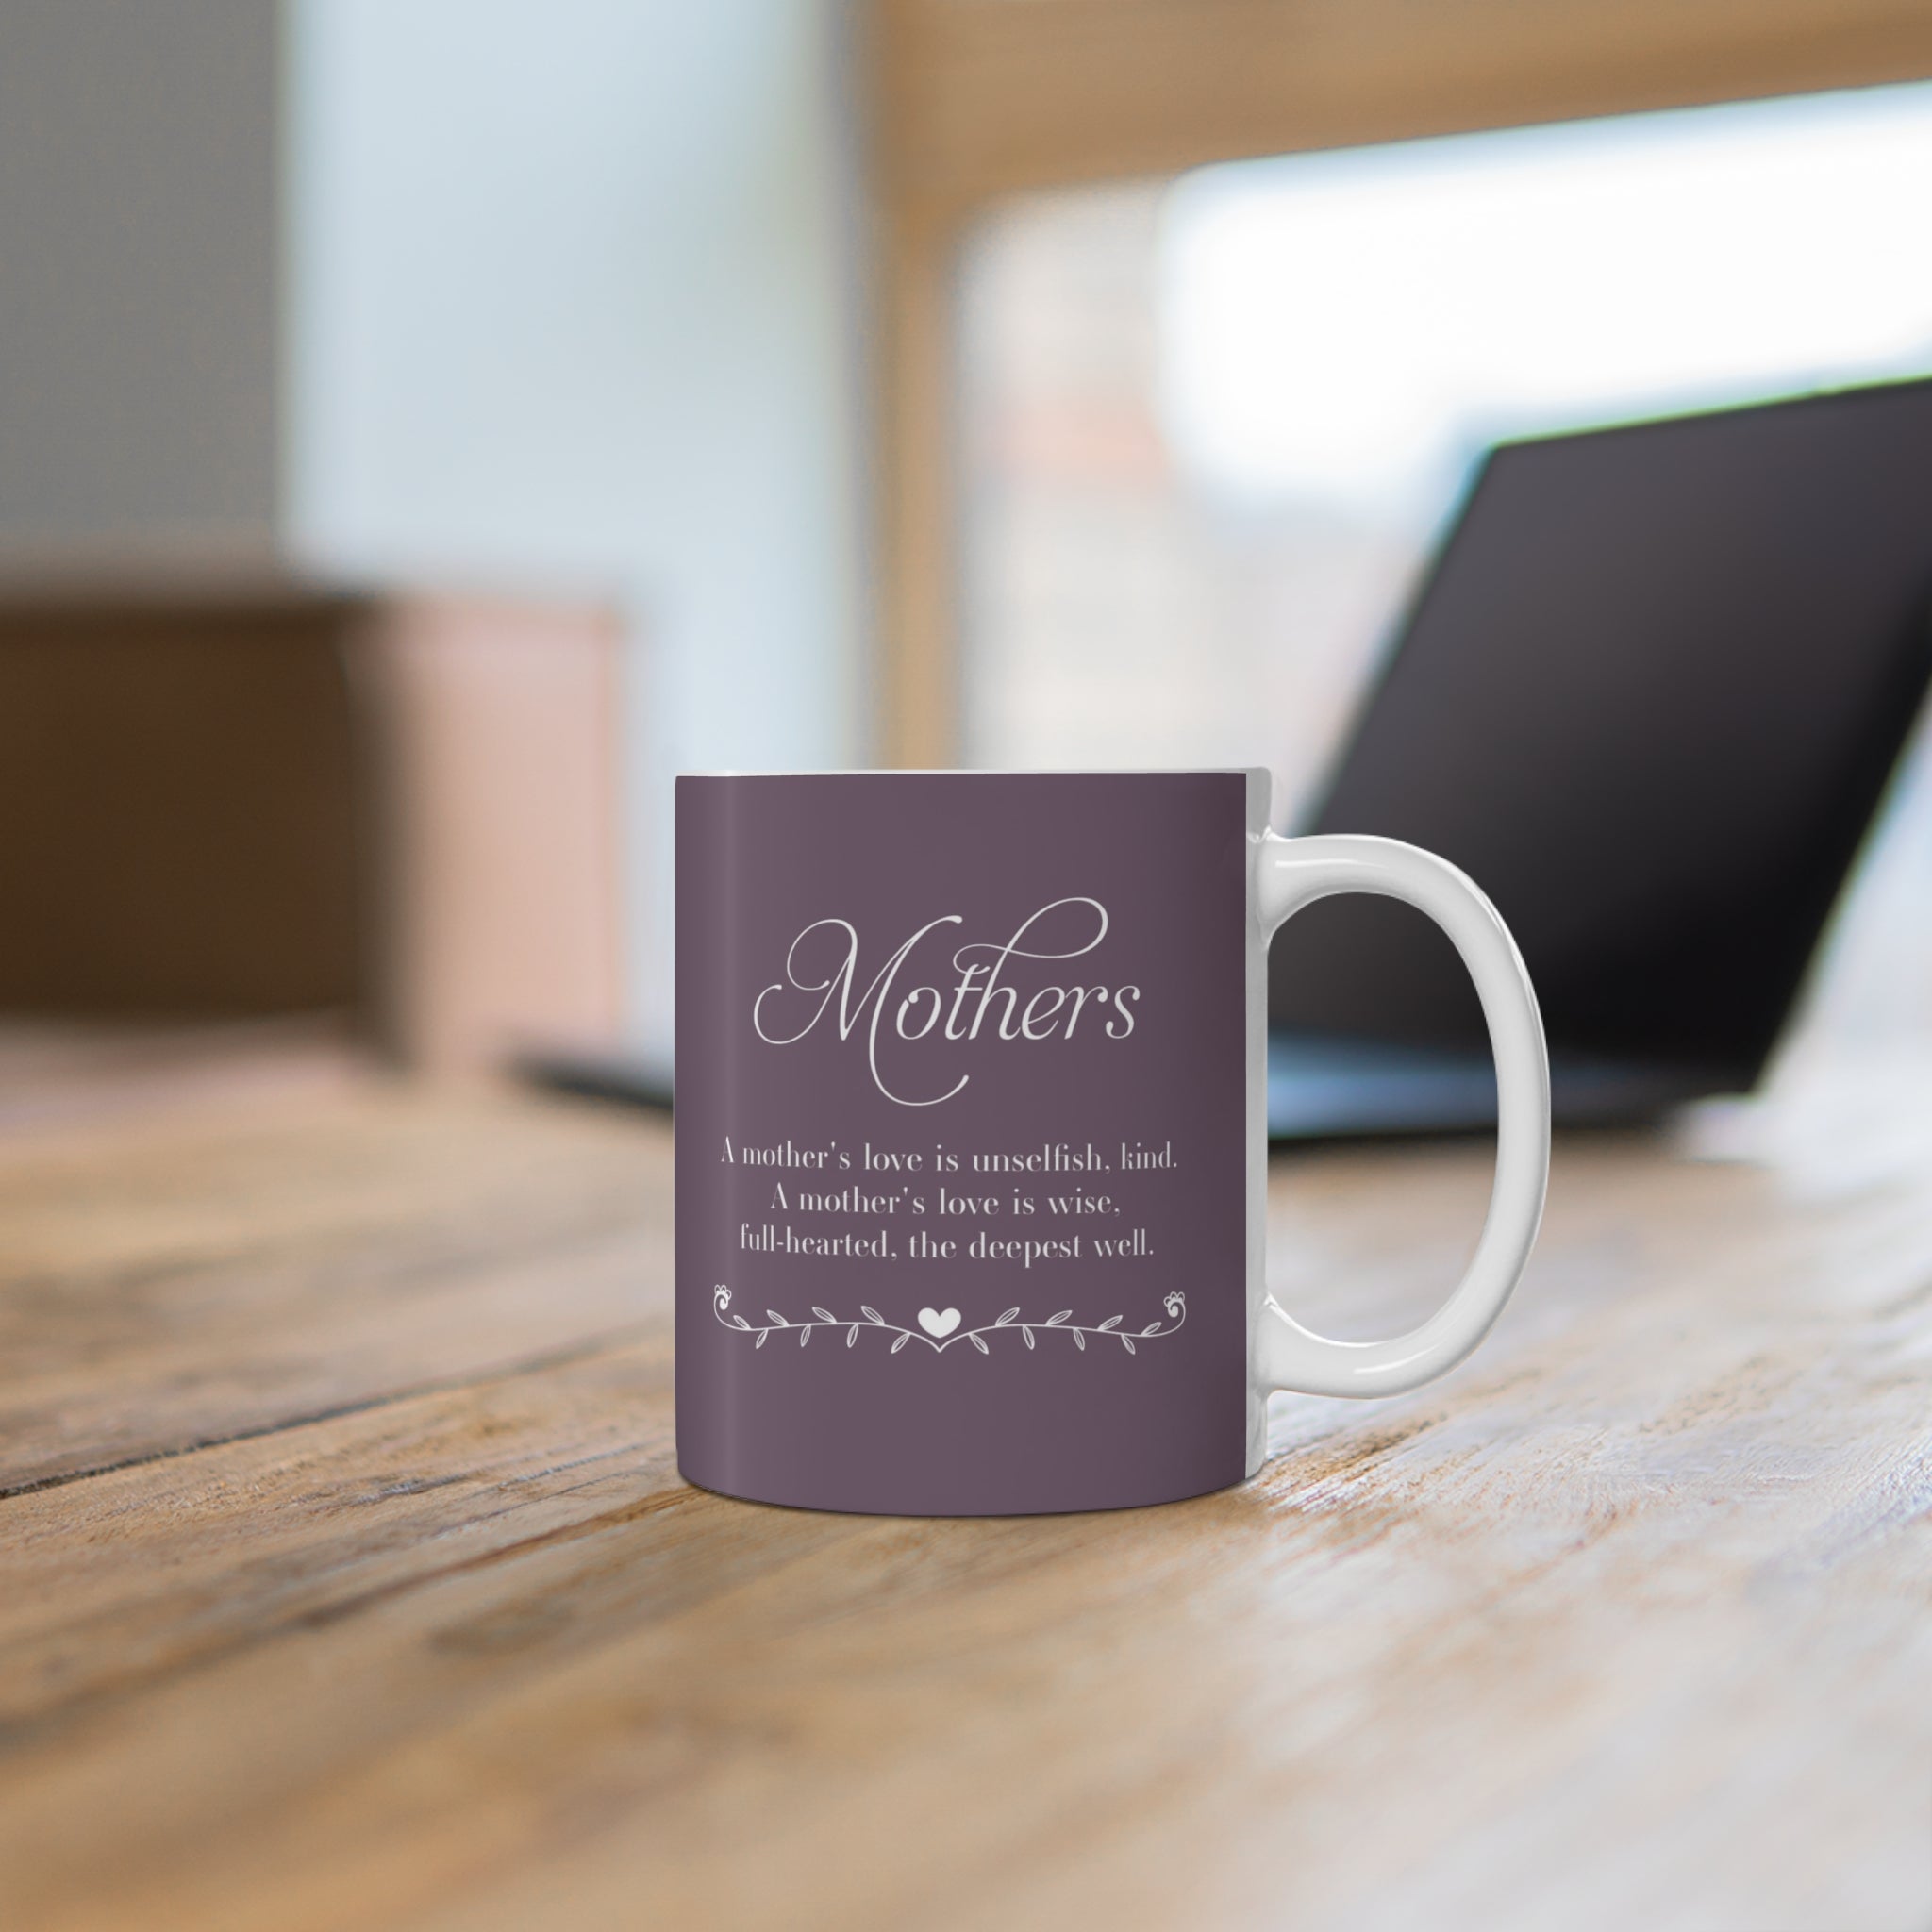 Mother's Love Mug - Plum Colored